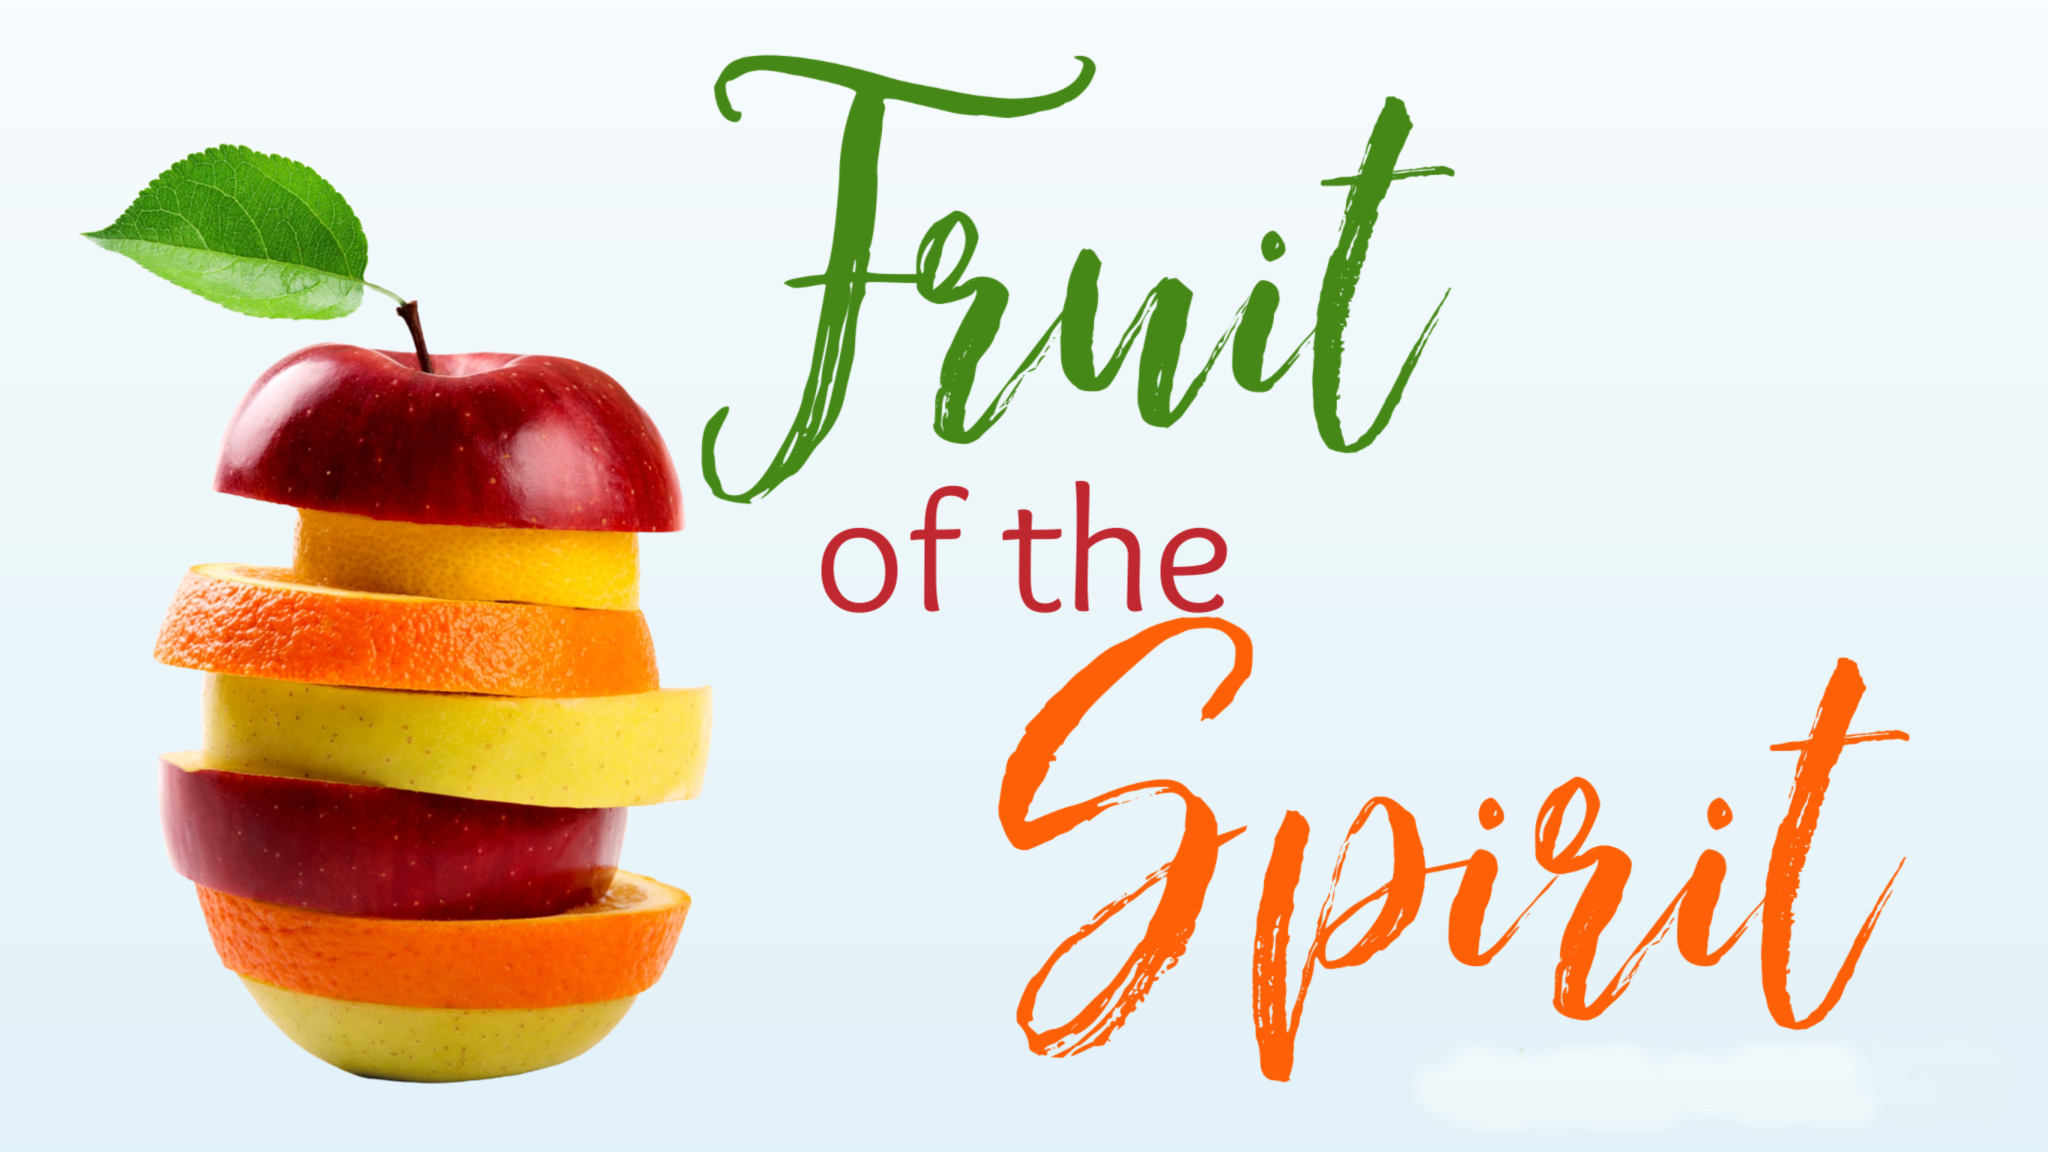 The Fruitful Life - Kindness